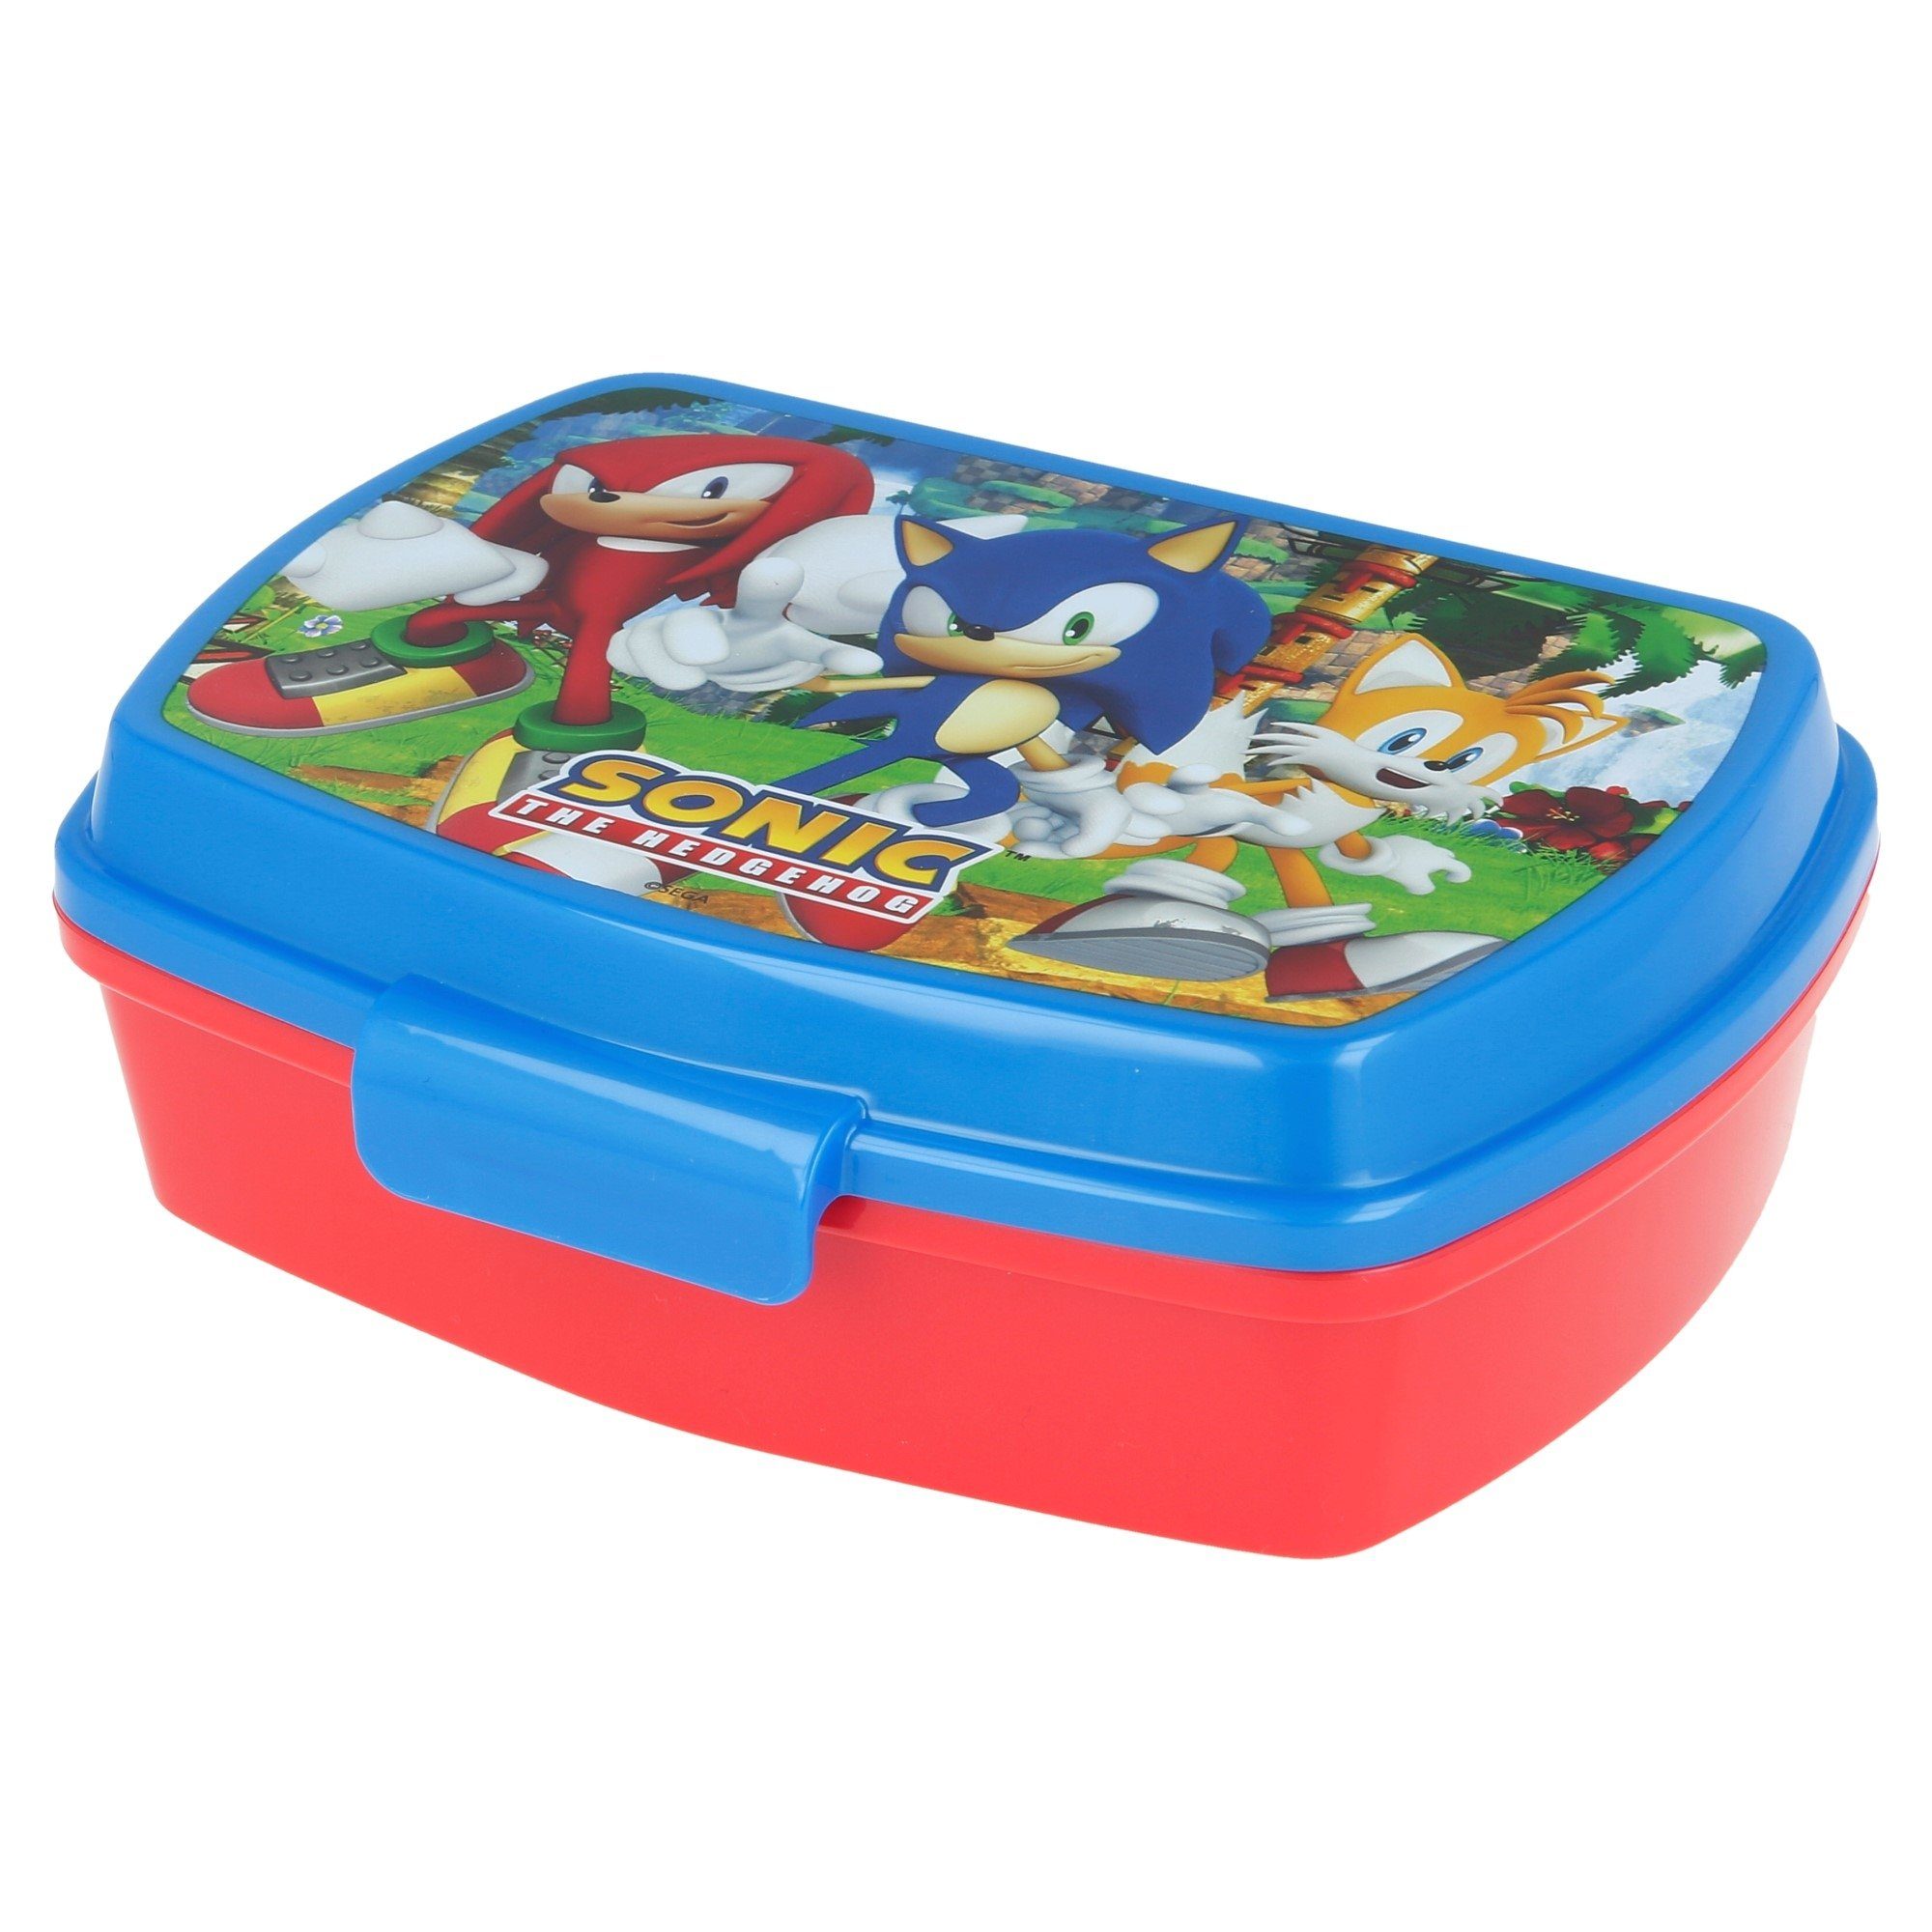 Sonic SEGA Lunchbox Sonic The Trinkbecher Set Brotdose Kinder Hedgehog mit